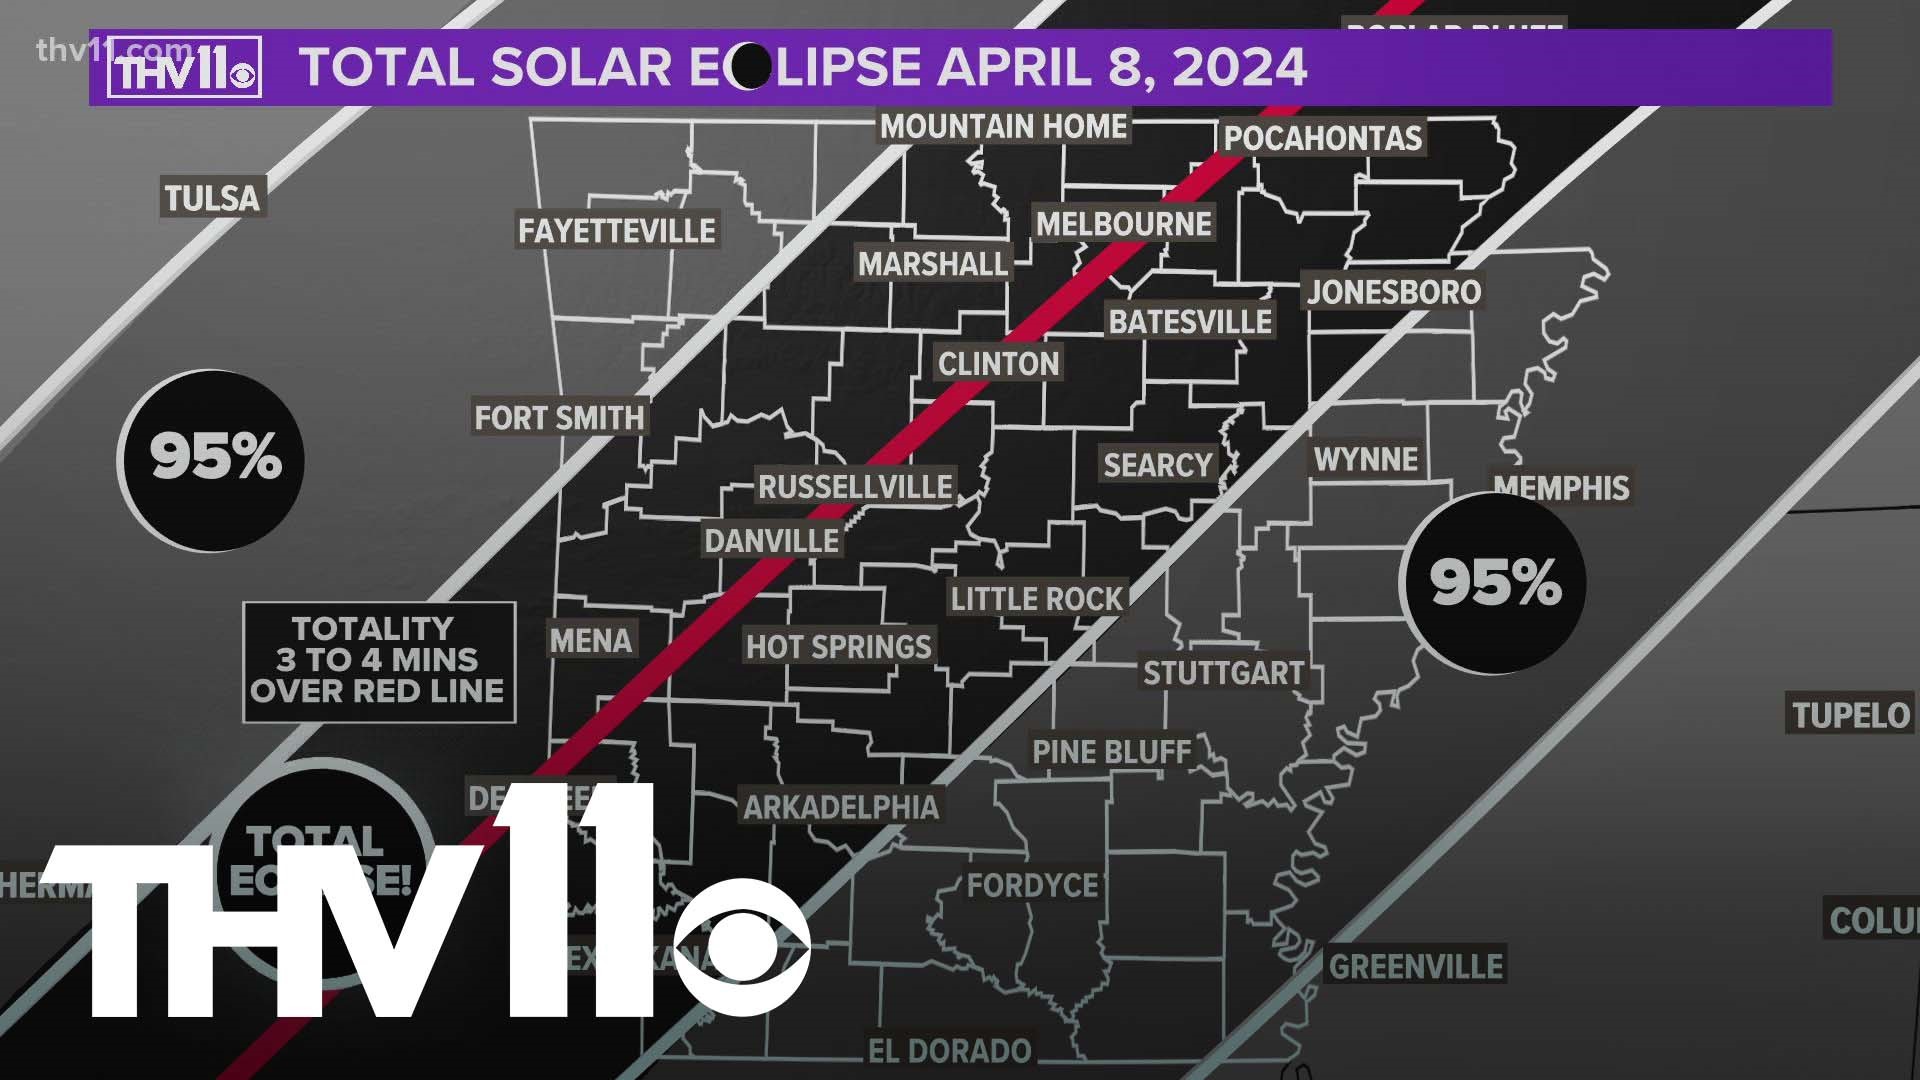 Eclipse Event In Ohio 2024 Birgit Sharyl